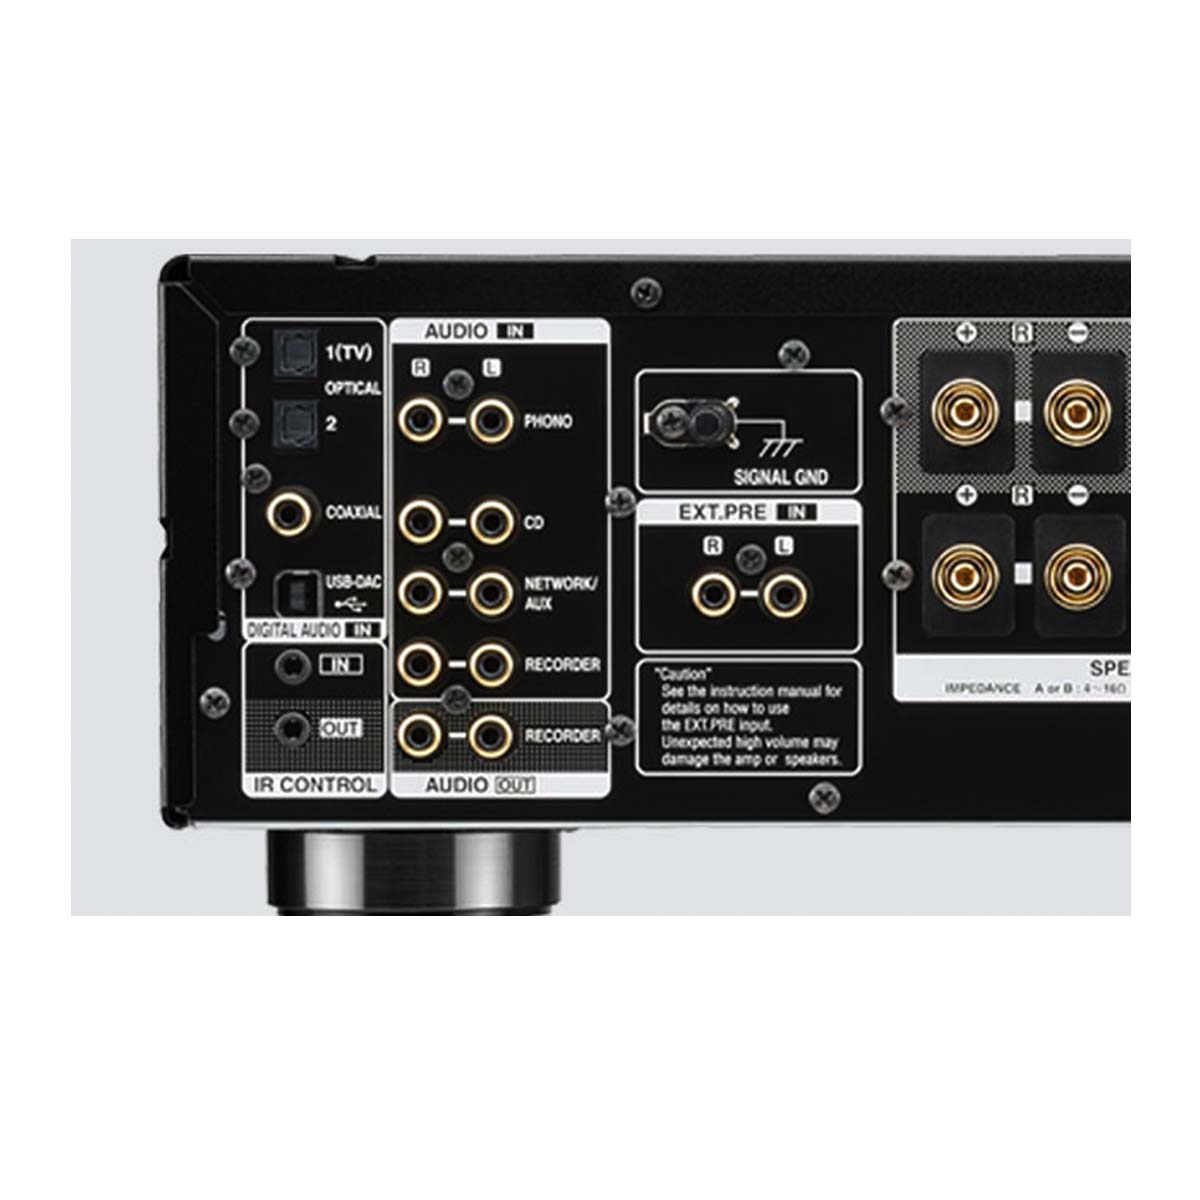 Denon PMA-1700NE 85W Integrated Network Amplifier - Black (PLUS $300 Cashback BONUS)